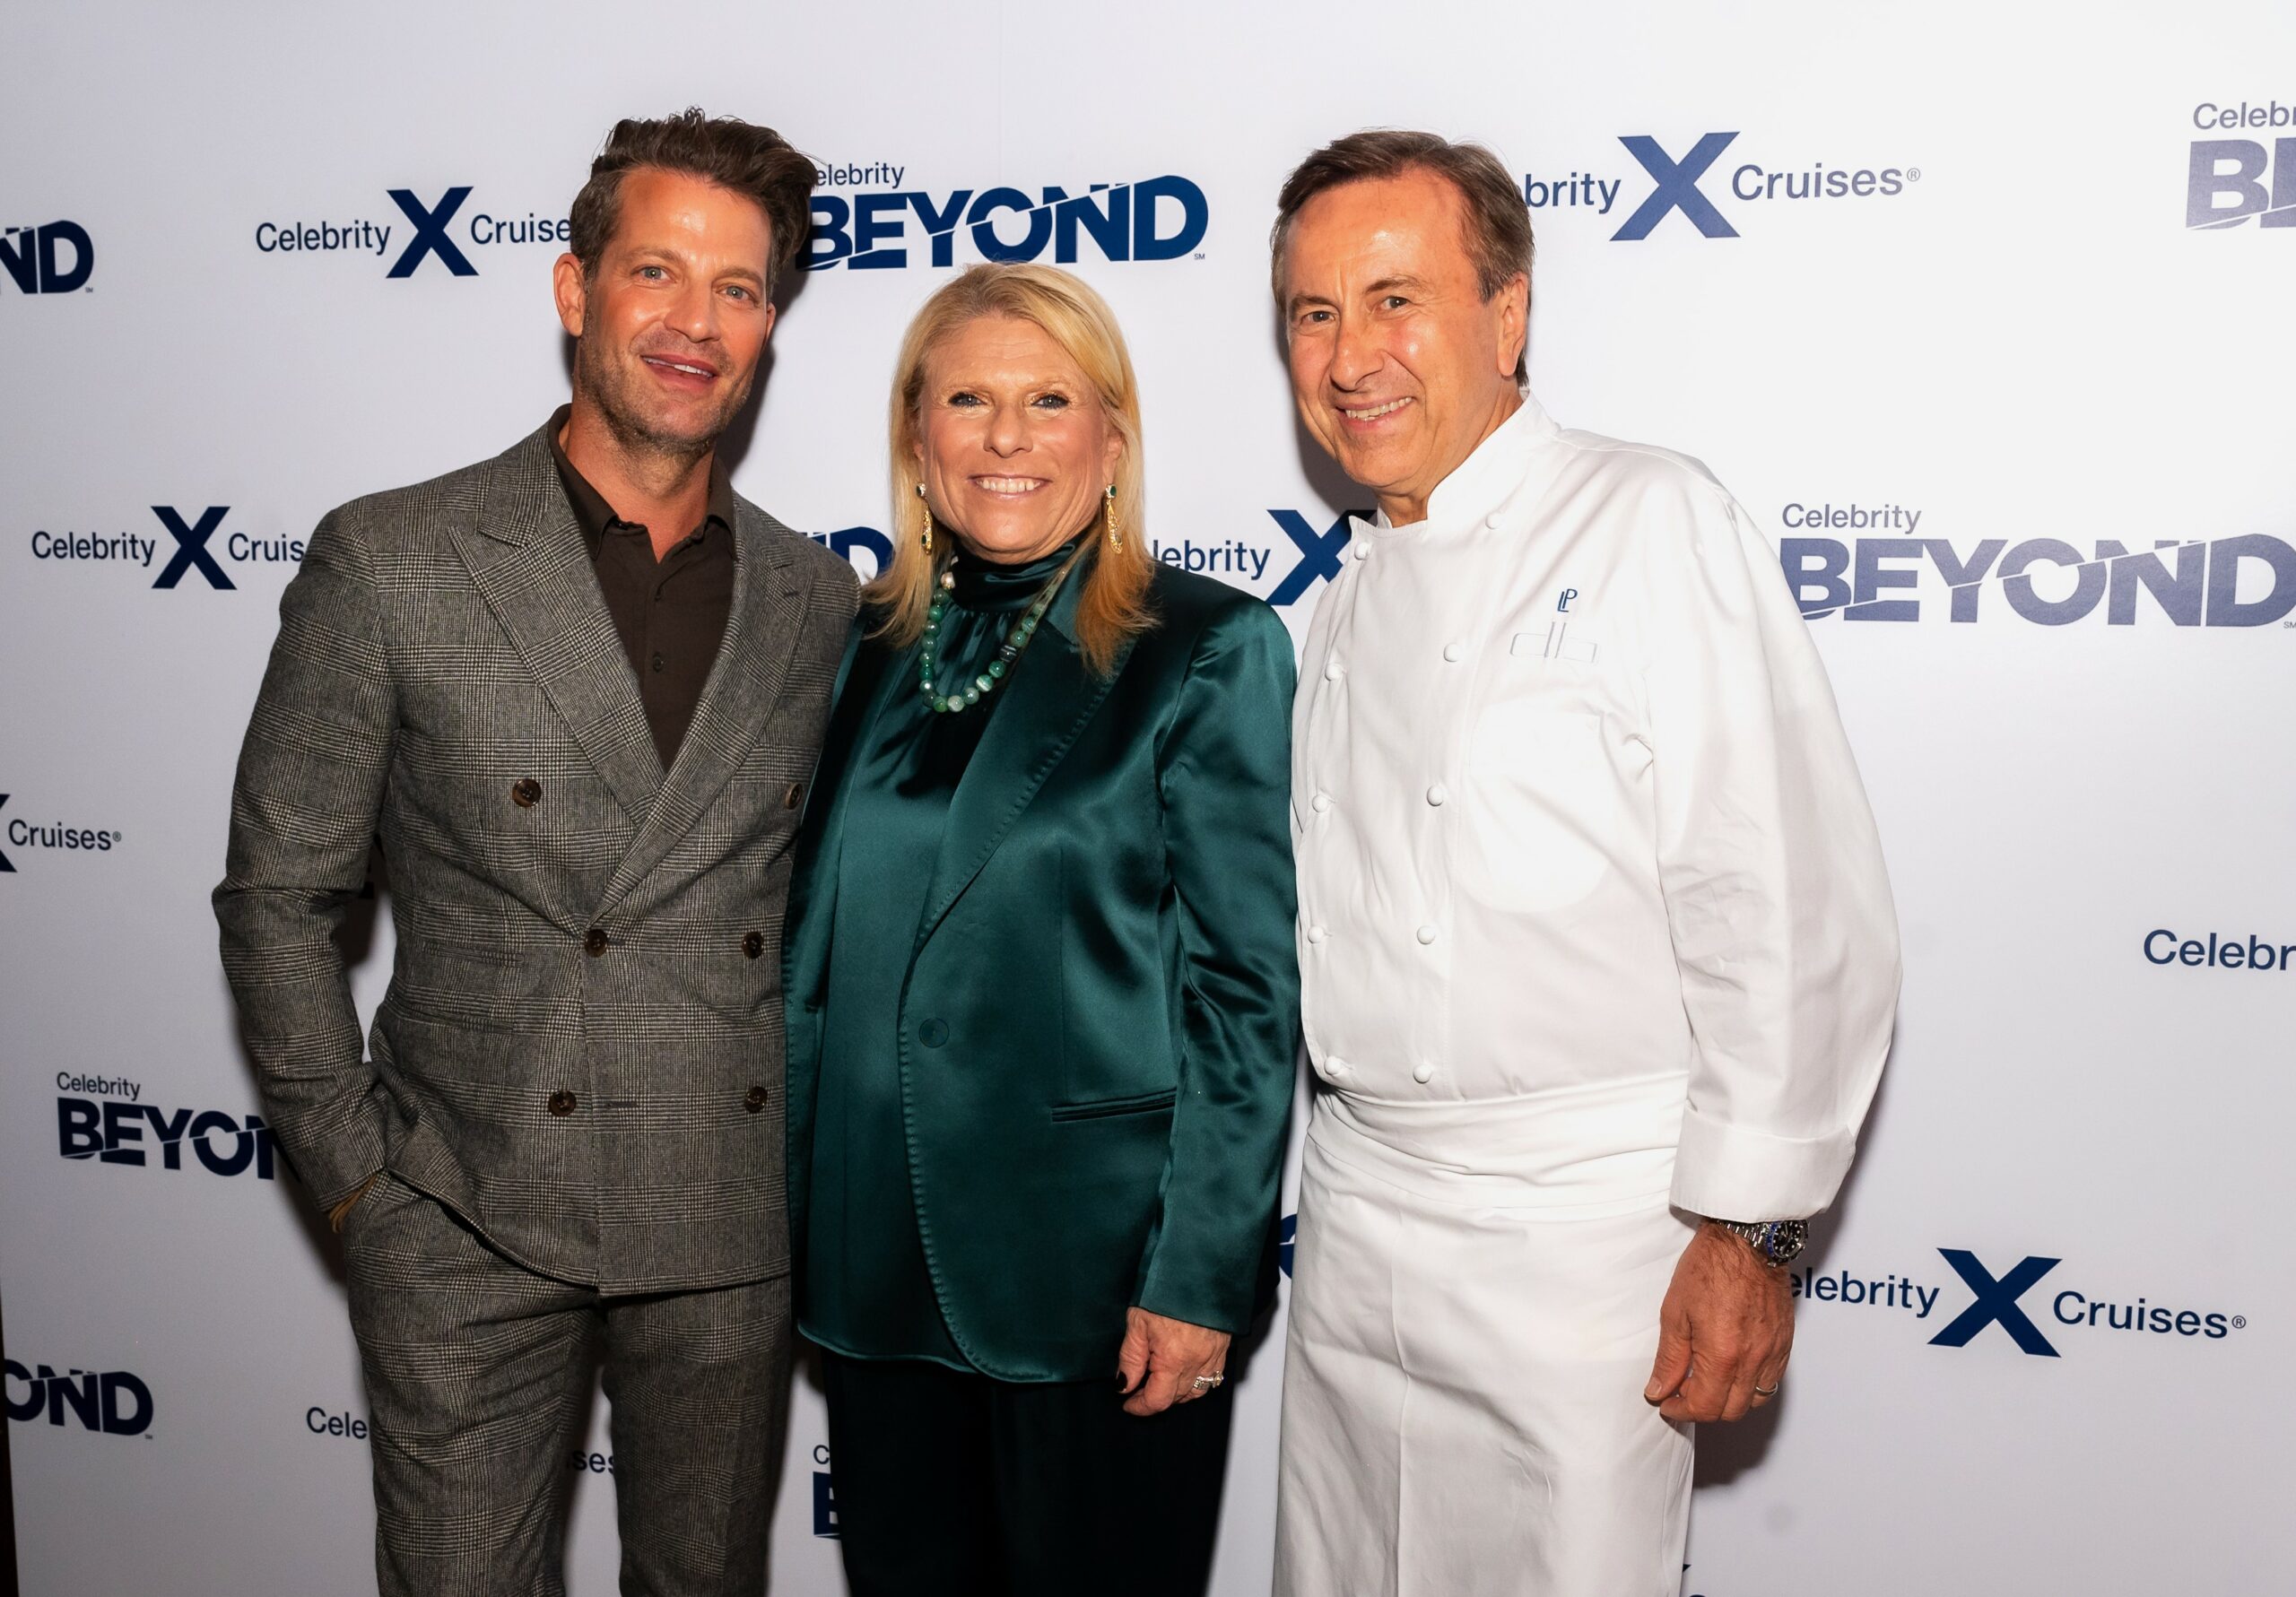 Left to right, designer Nate Burkus, Celebrity's President Lisa Lutoff Perlo and famed Master Chef Daniel Boulud. Photo by Celebrity Cruises.